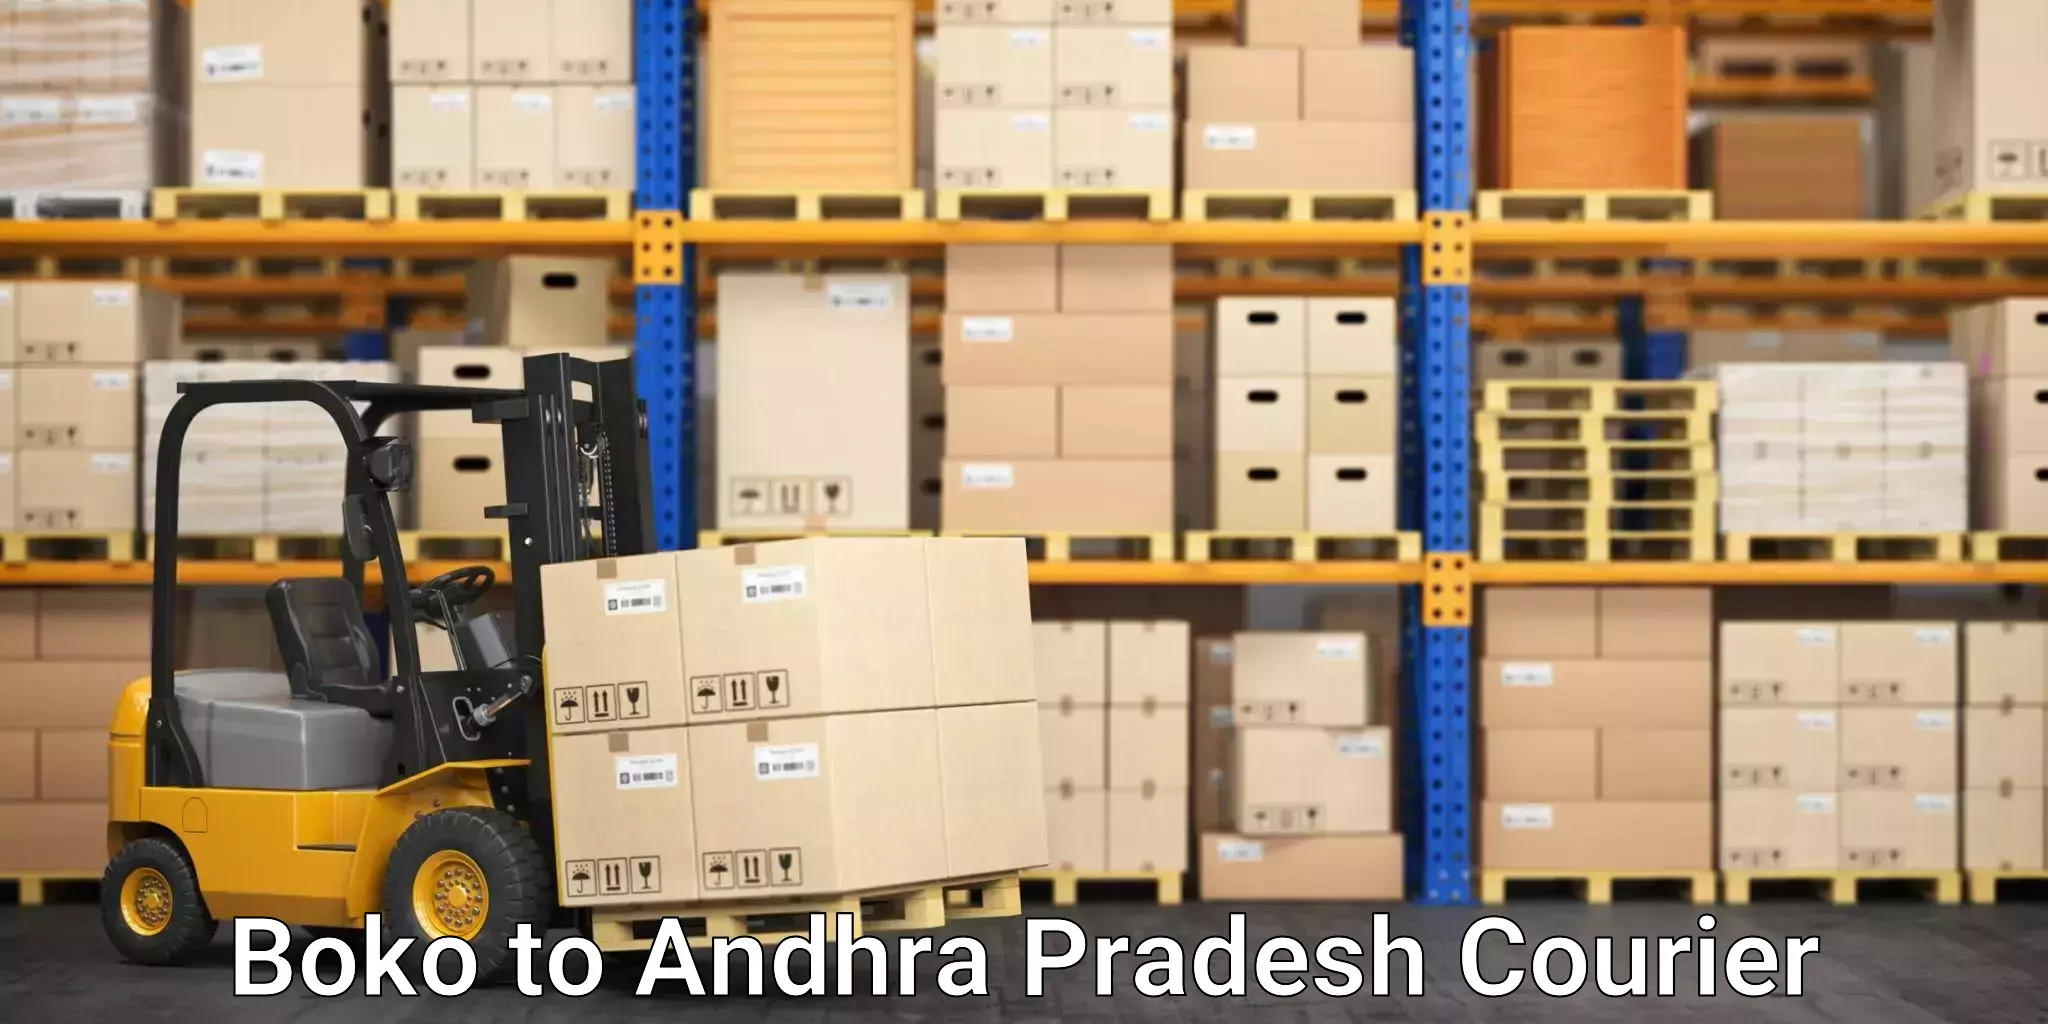 Parcel service for businesses Boko to Andhra Pradesh